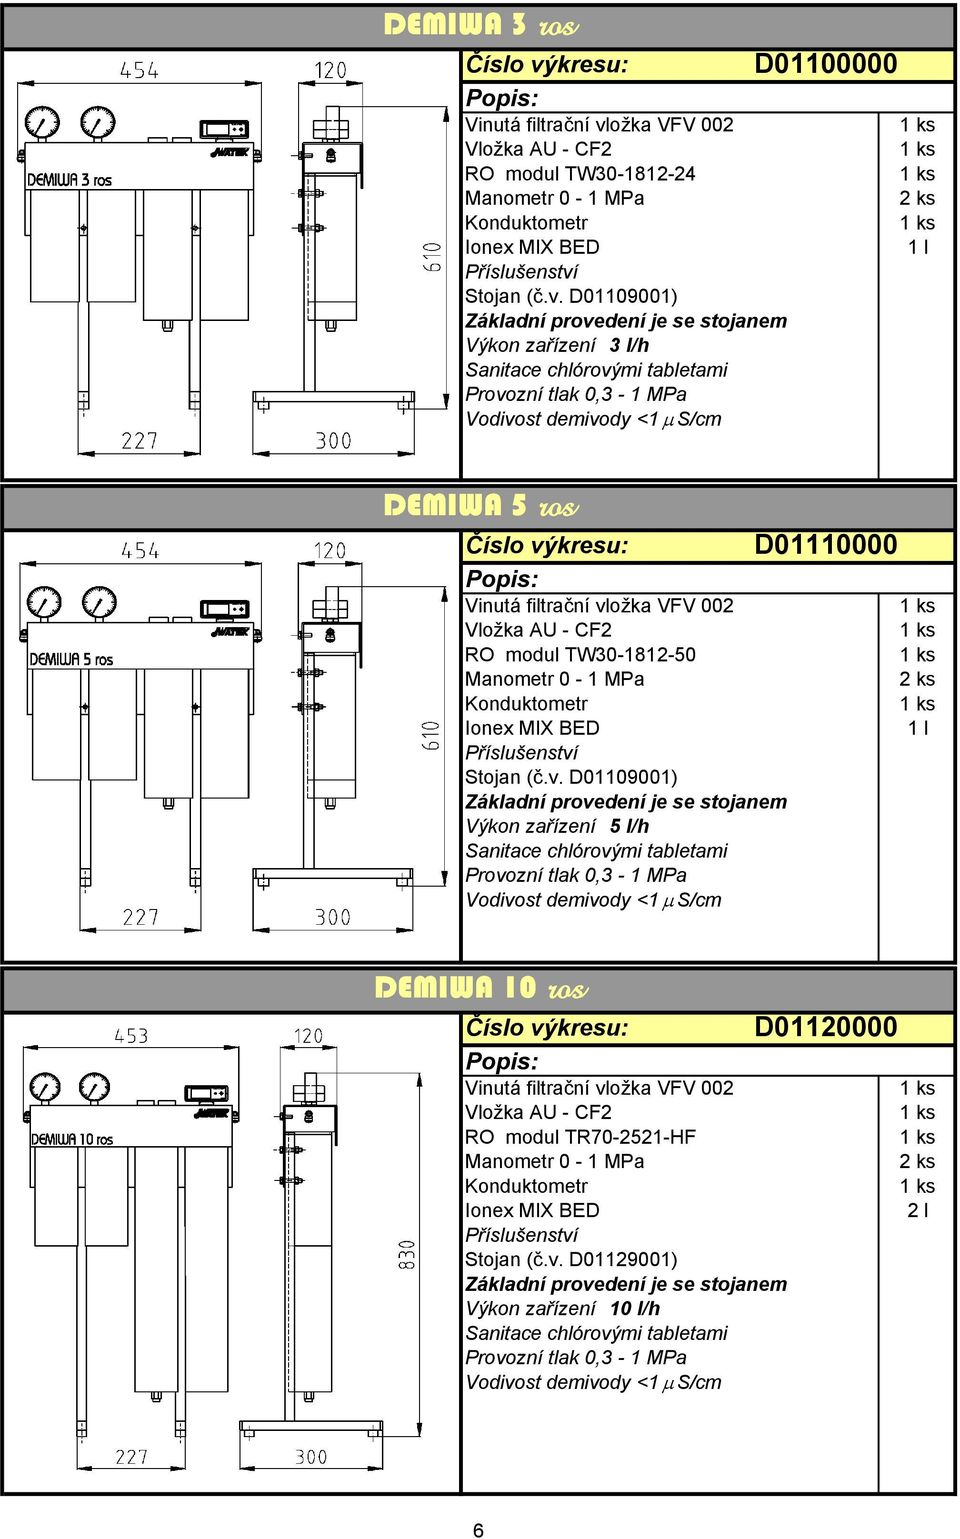 zařízení 5 l/h Provozní tlak 0,3 1 MPa D01110000 DEMIWA 10 ros Vložka AU CF2 RO modul TR702521HF